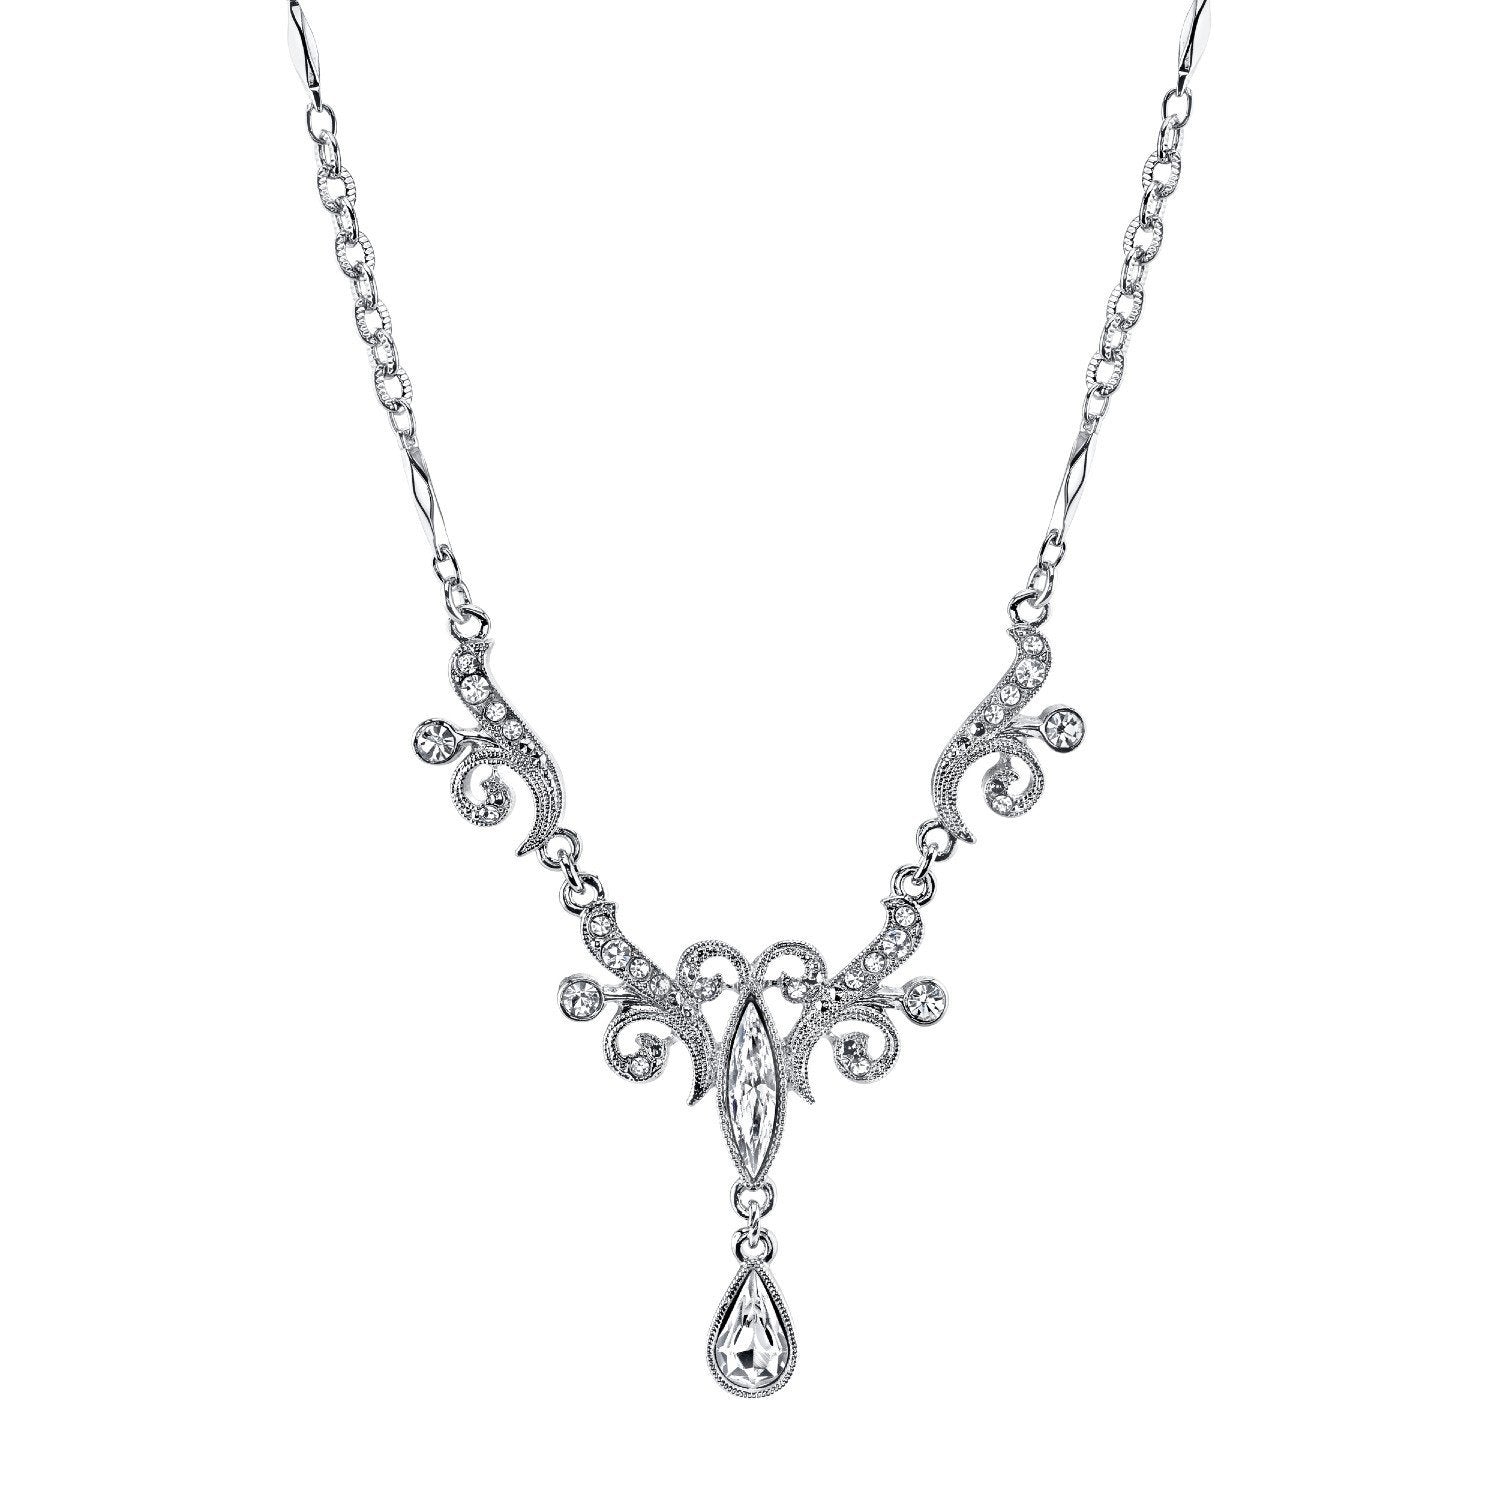 1928 Jewelry Silver-Tone Crystal Teardrop Necklace